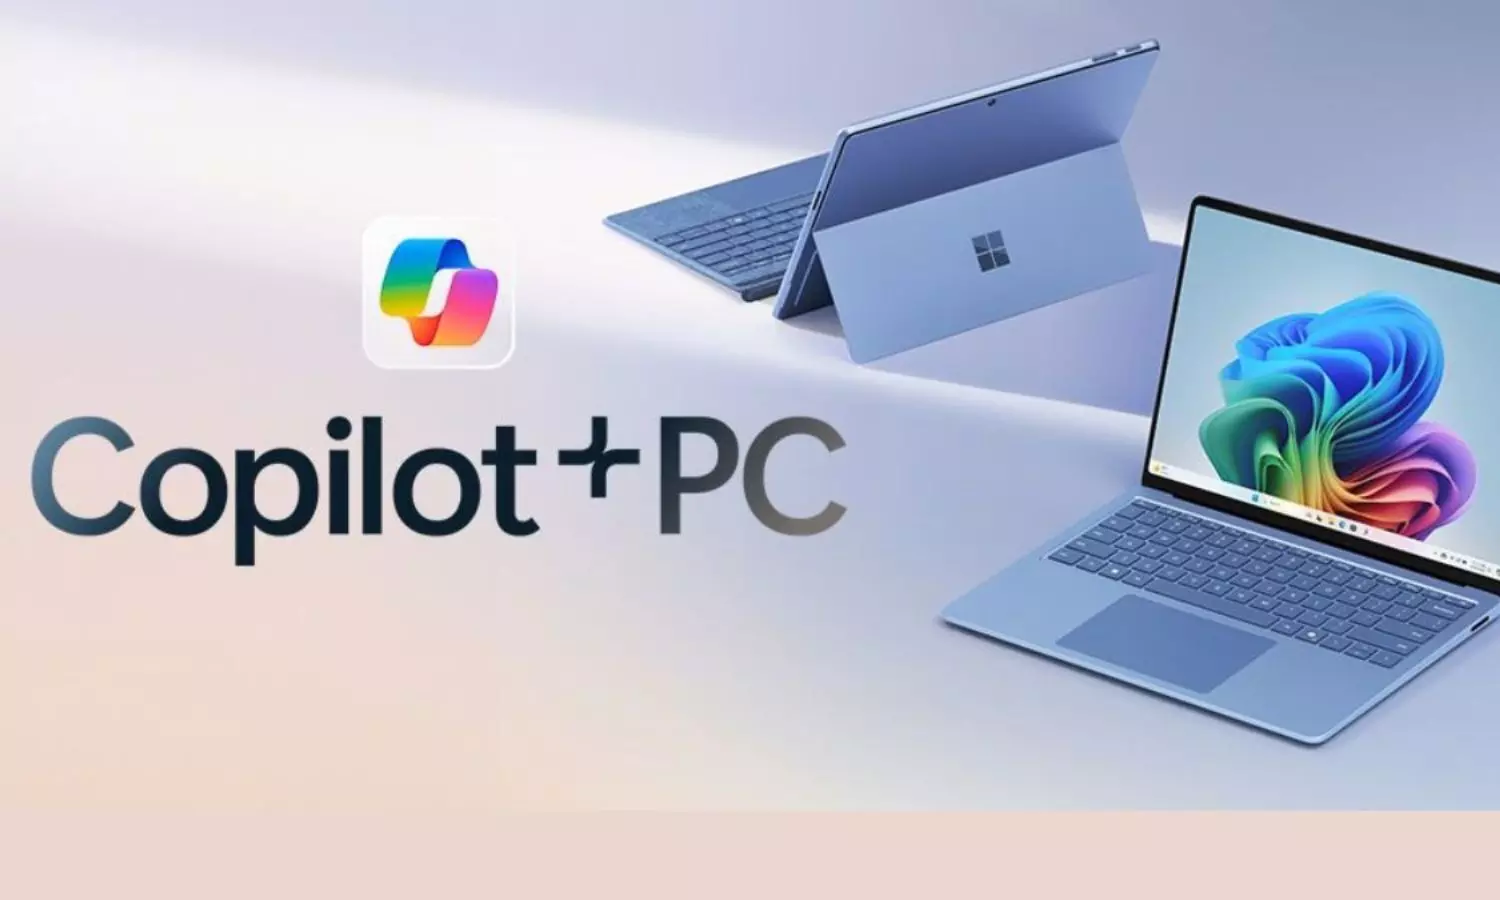 Exploring Microsofts Copilot+ PCs: Surface pro and surface laptop innovations